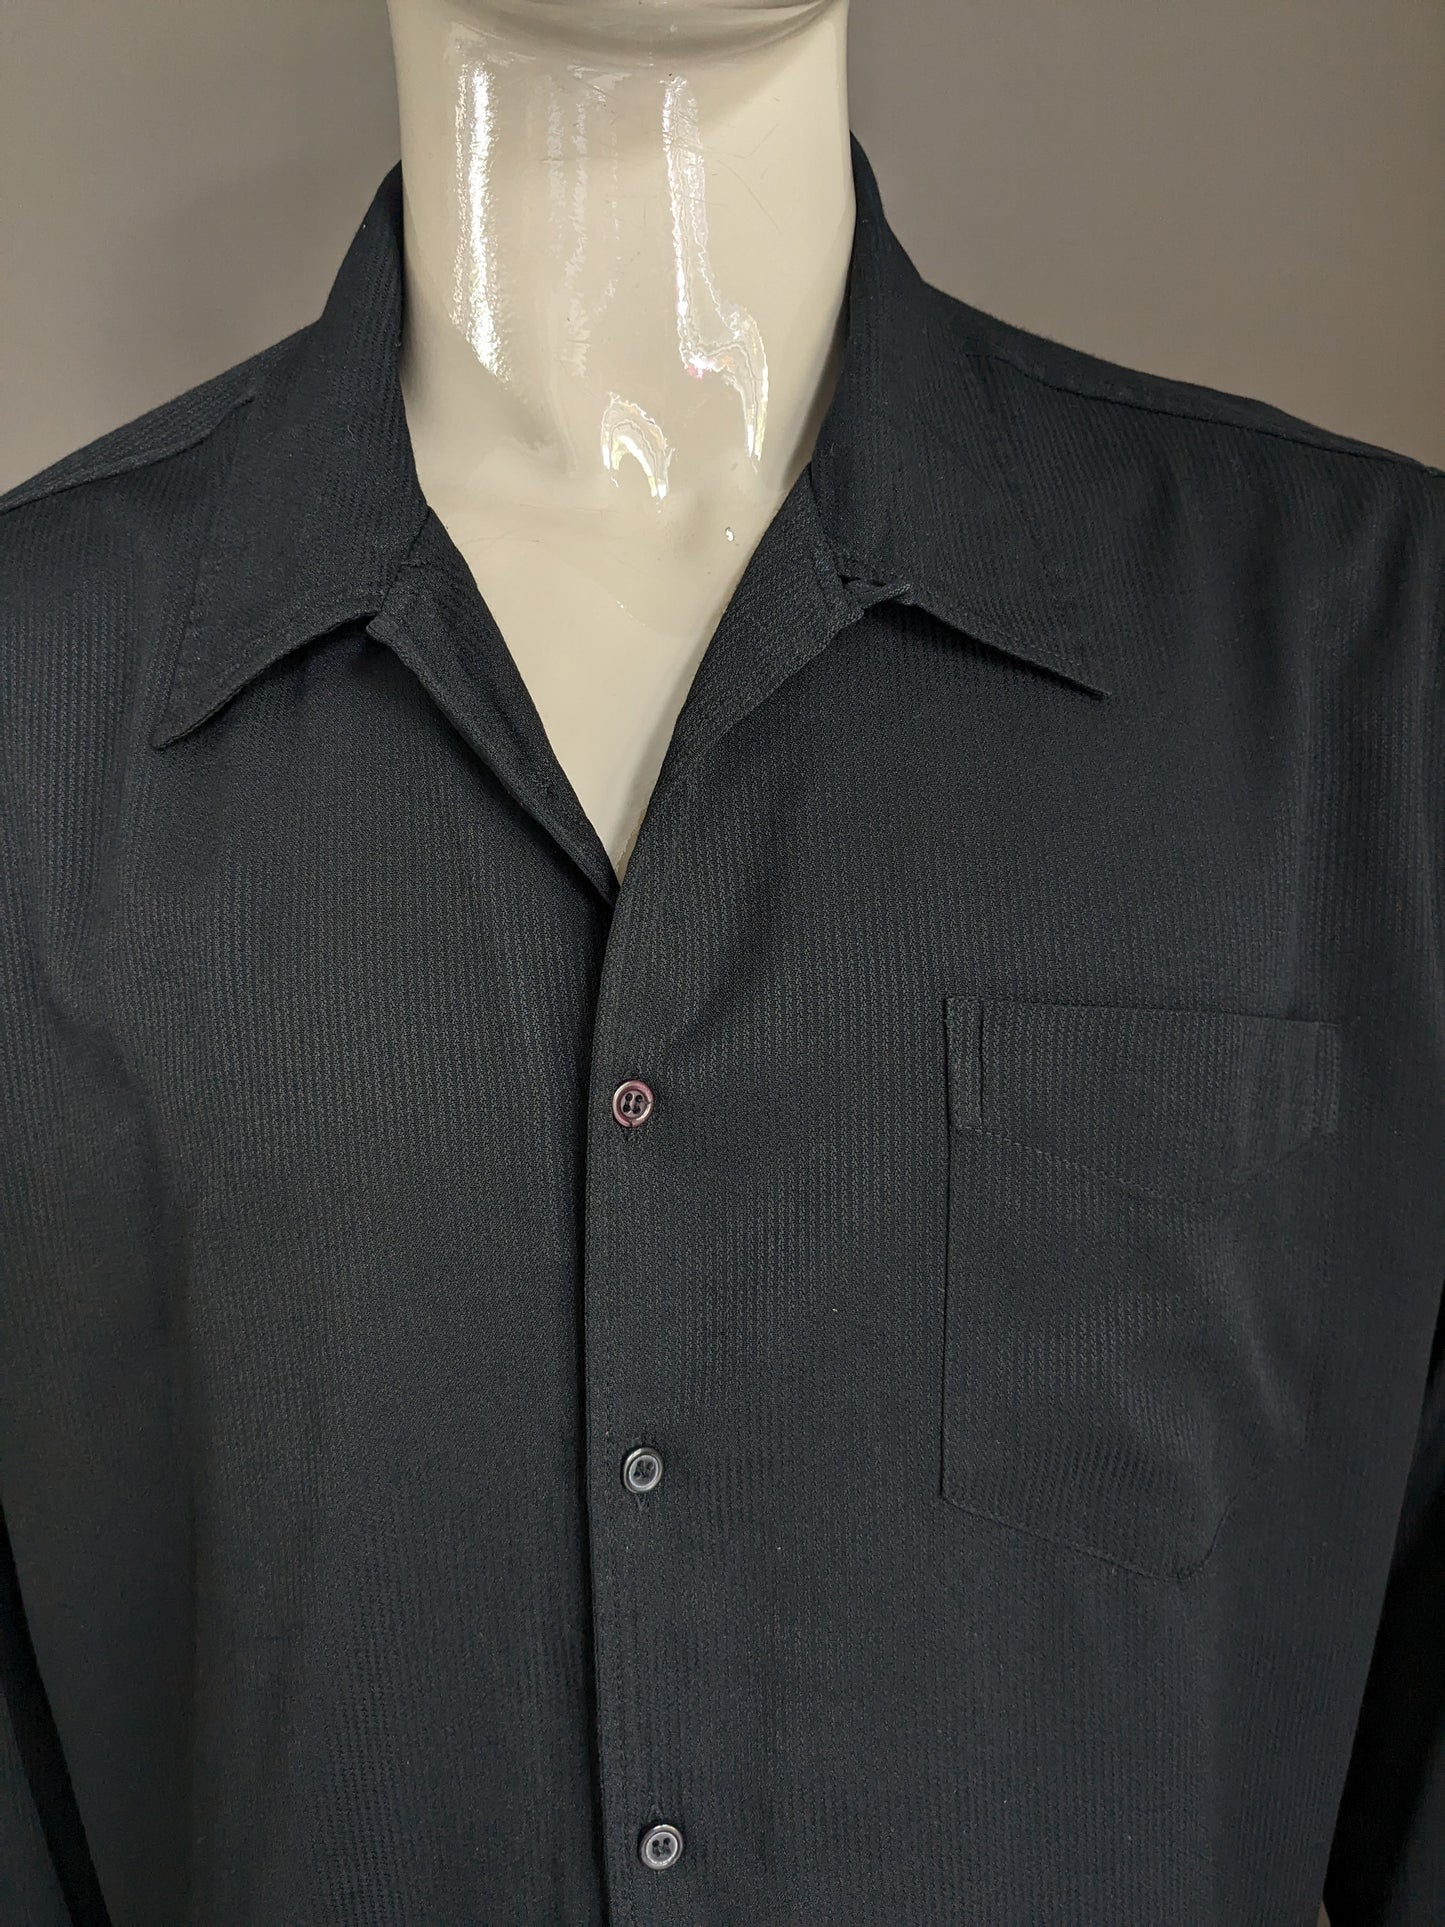 John F. Gee vintage overhemd Zwart gestreept motief. Maat 2XL-XXL / 3XL-XXXL.